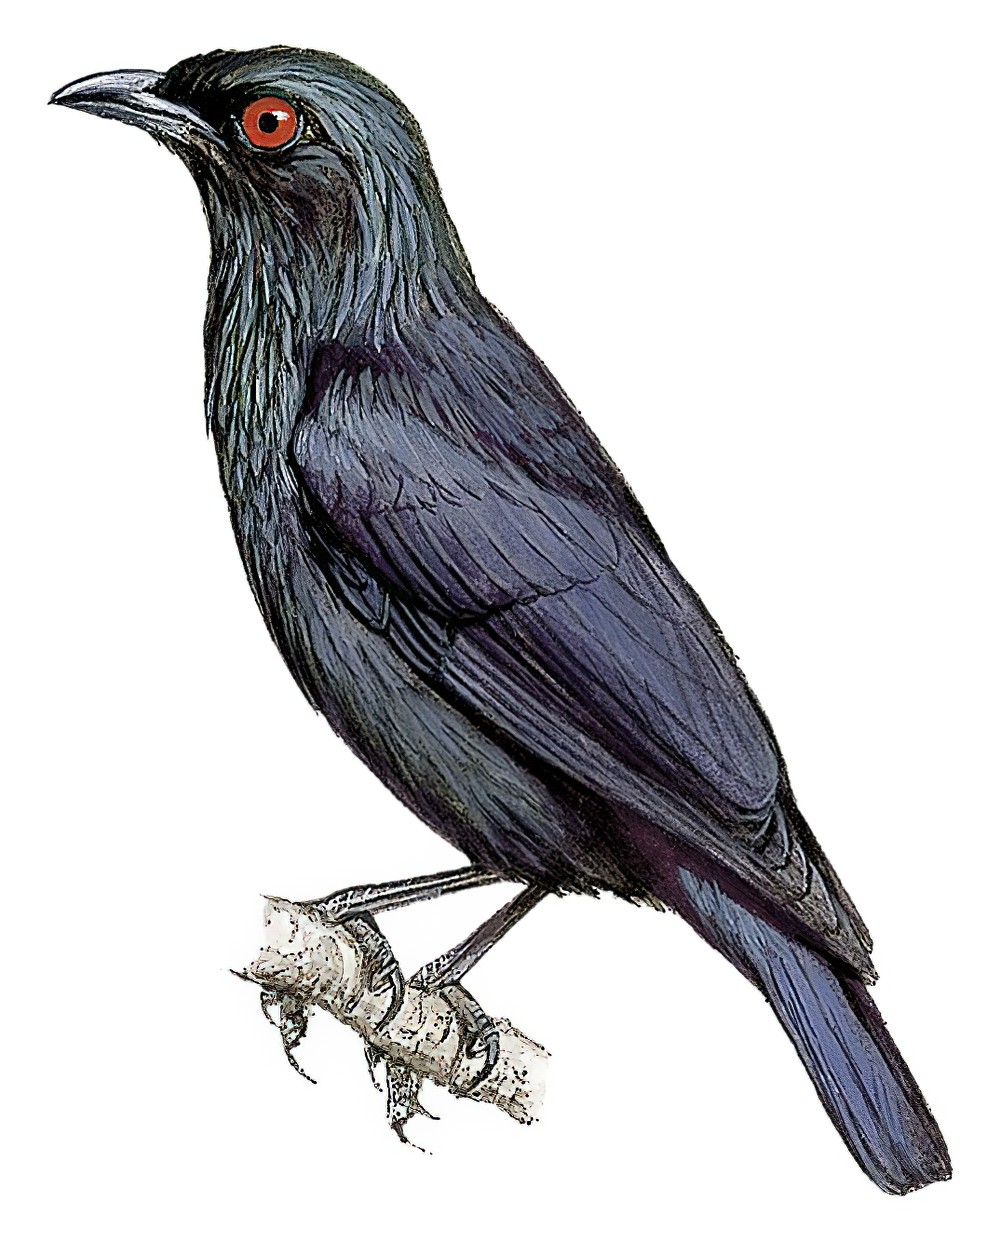 Singing Starling / Aplonis cantoroides